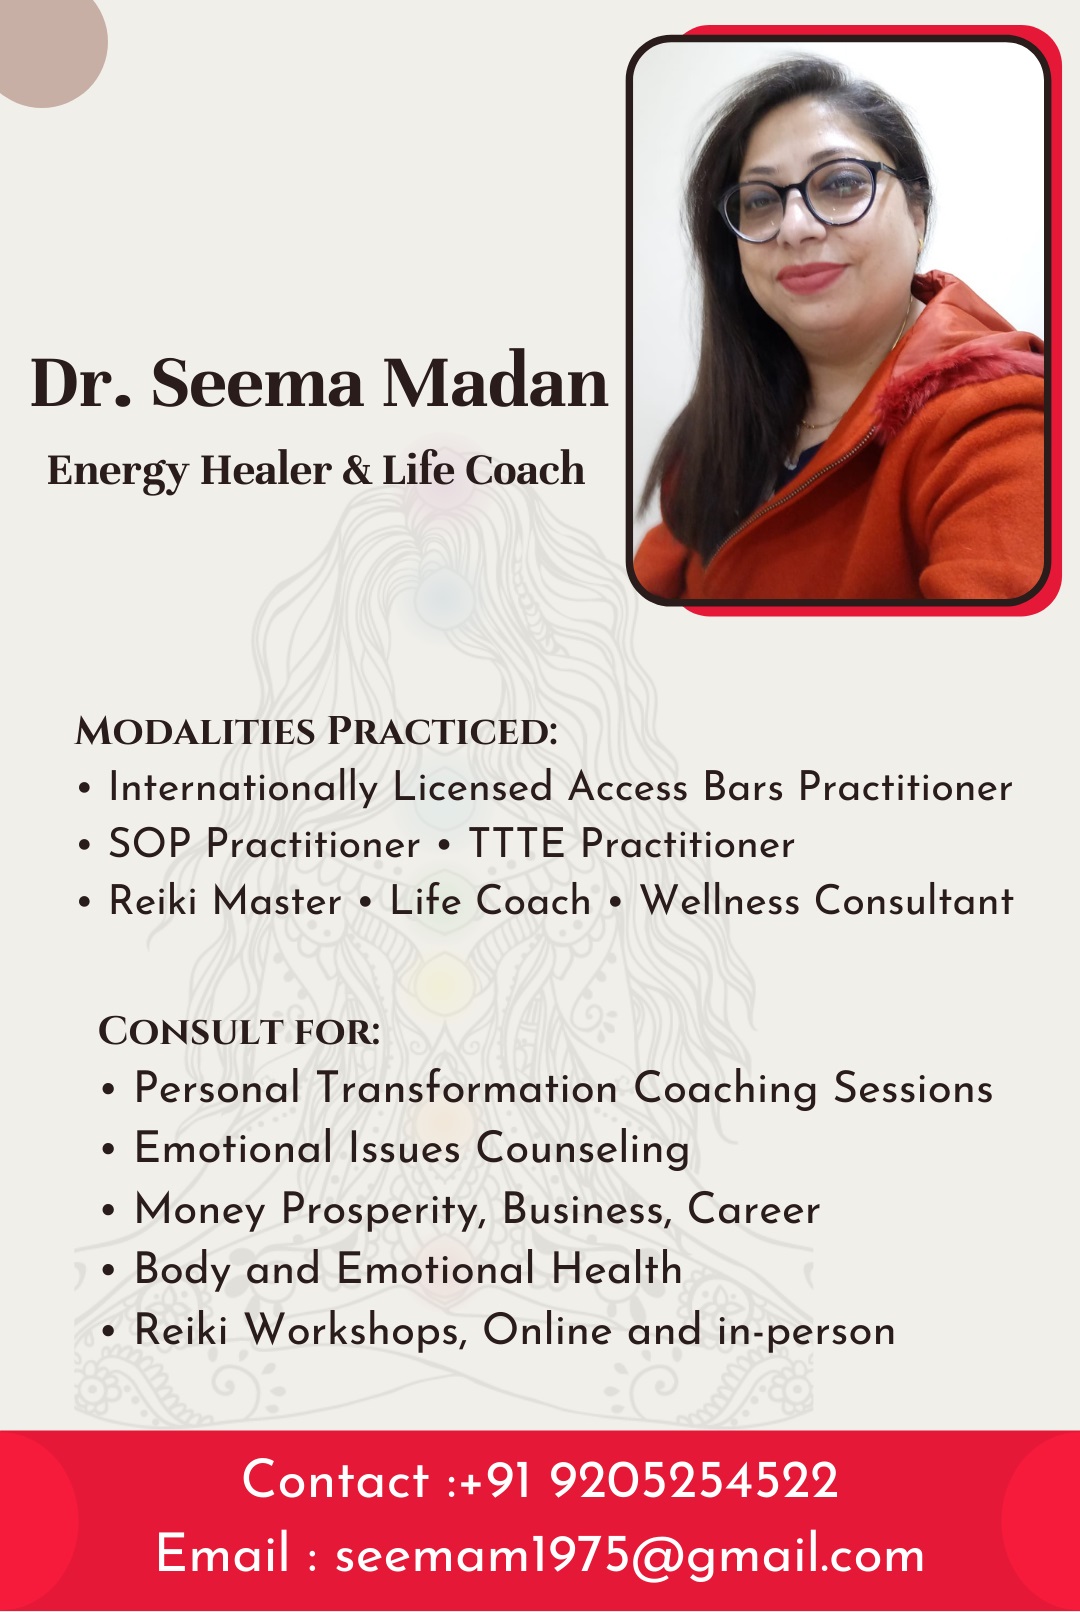 Dr. Seema Madan - Energy Healer & Life Coach - Bhopal